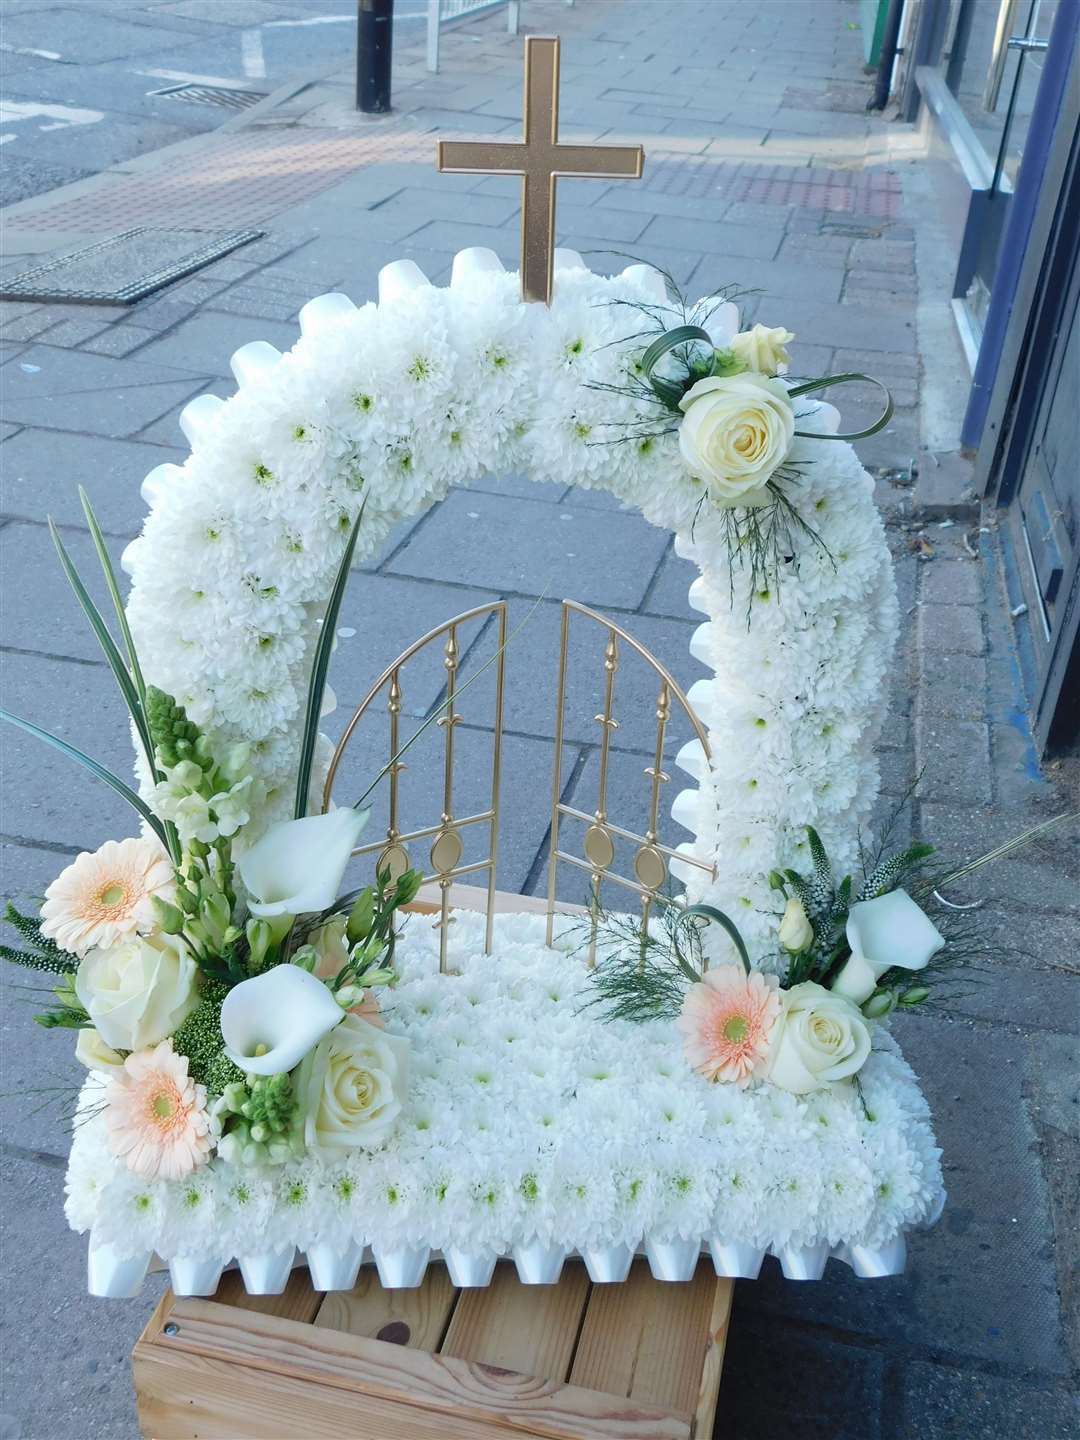 Gates of Heaven funeral arrangement. Picture: Natalie Rayfield